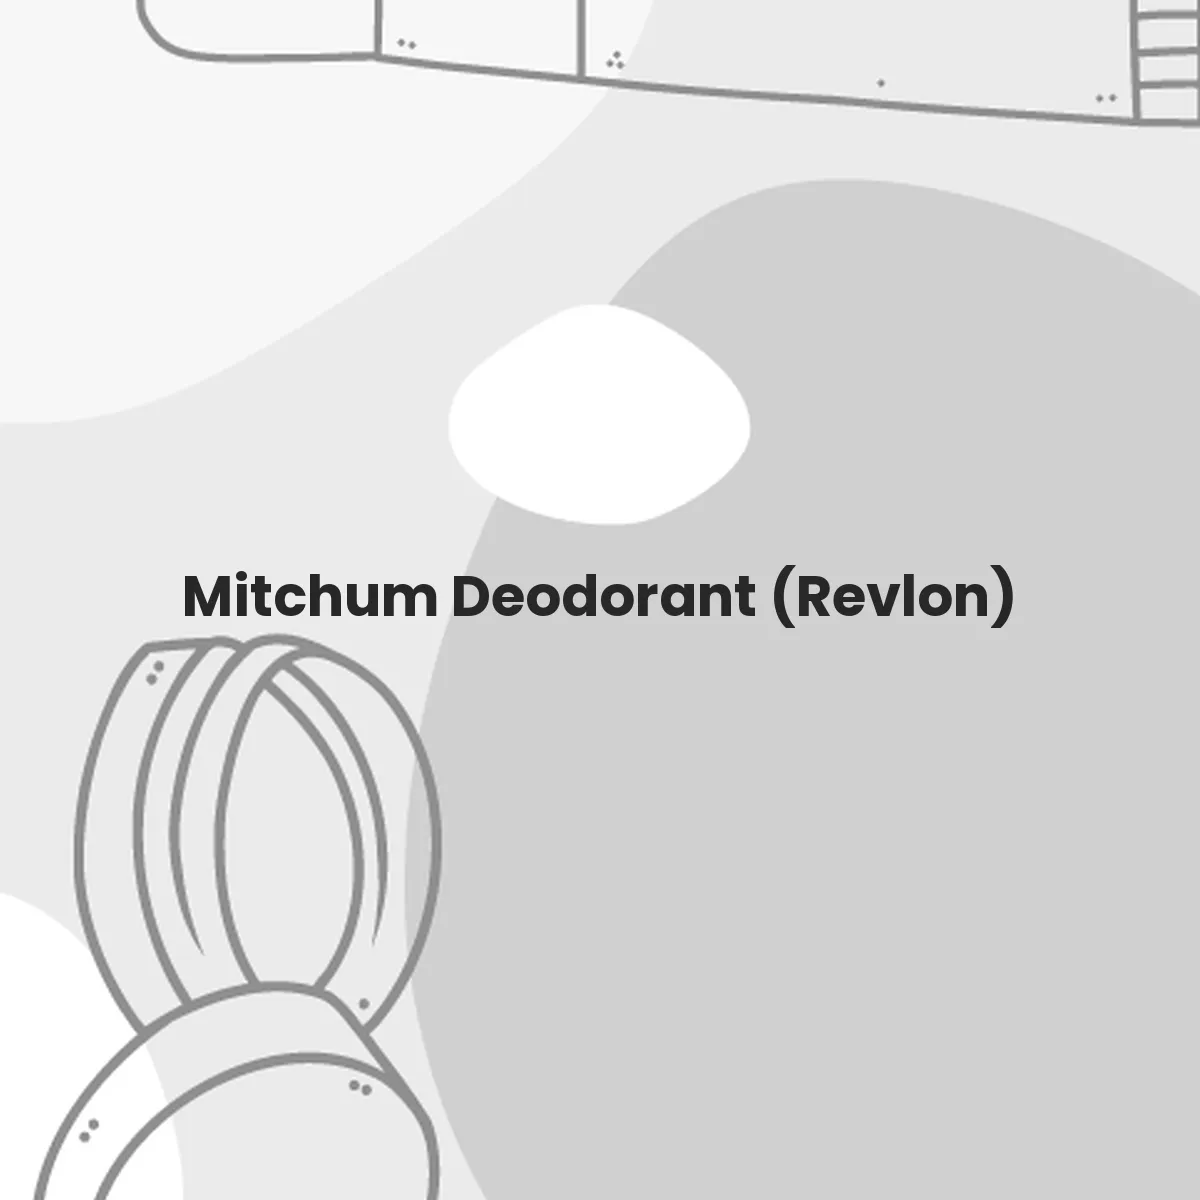 Mitchum Deodorant (Revlon) testa en animales?